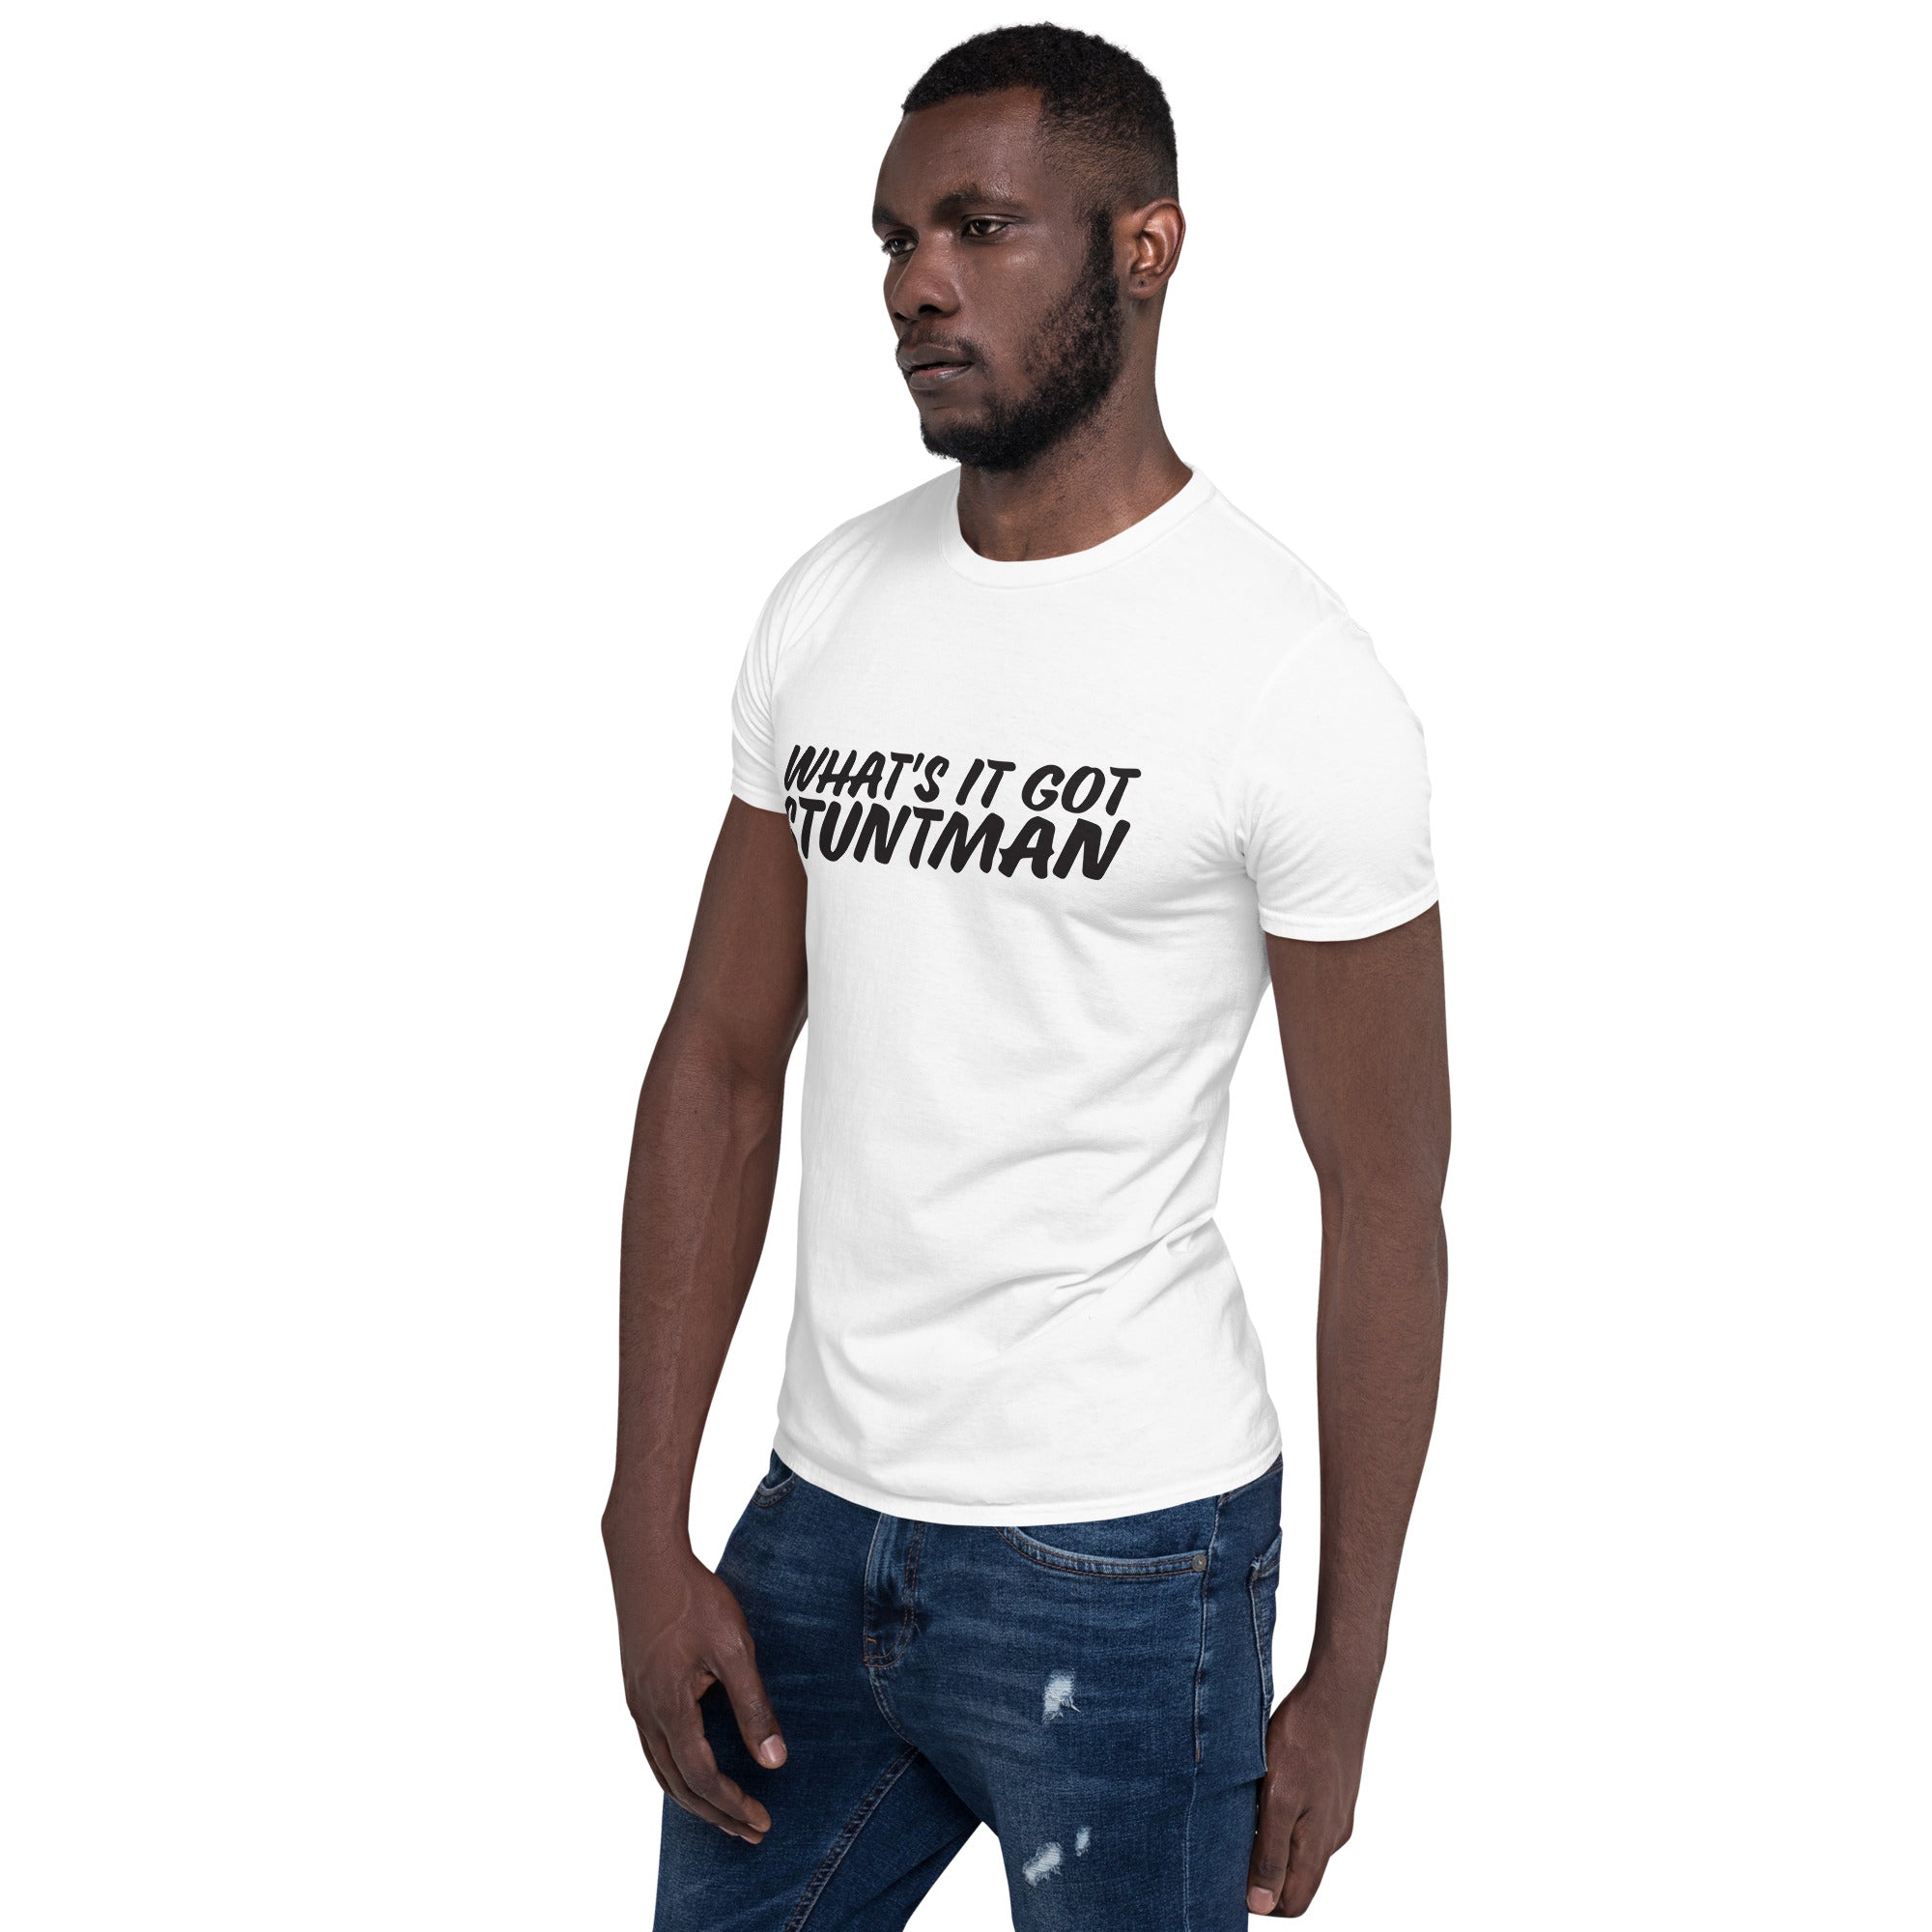 What's It Got Stuntman Unisex T-Shirt